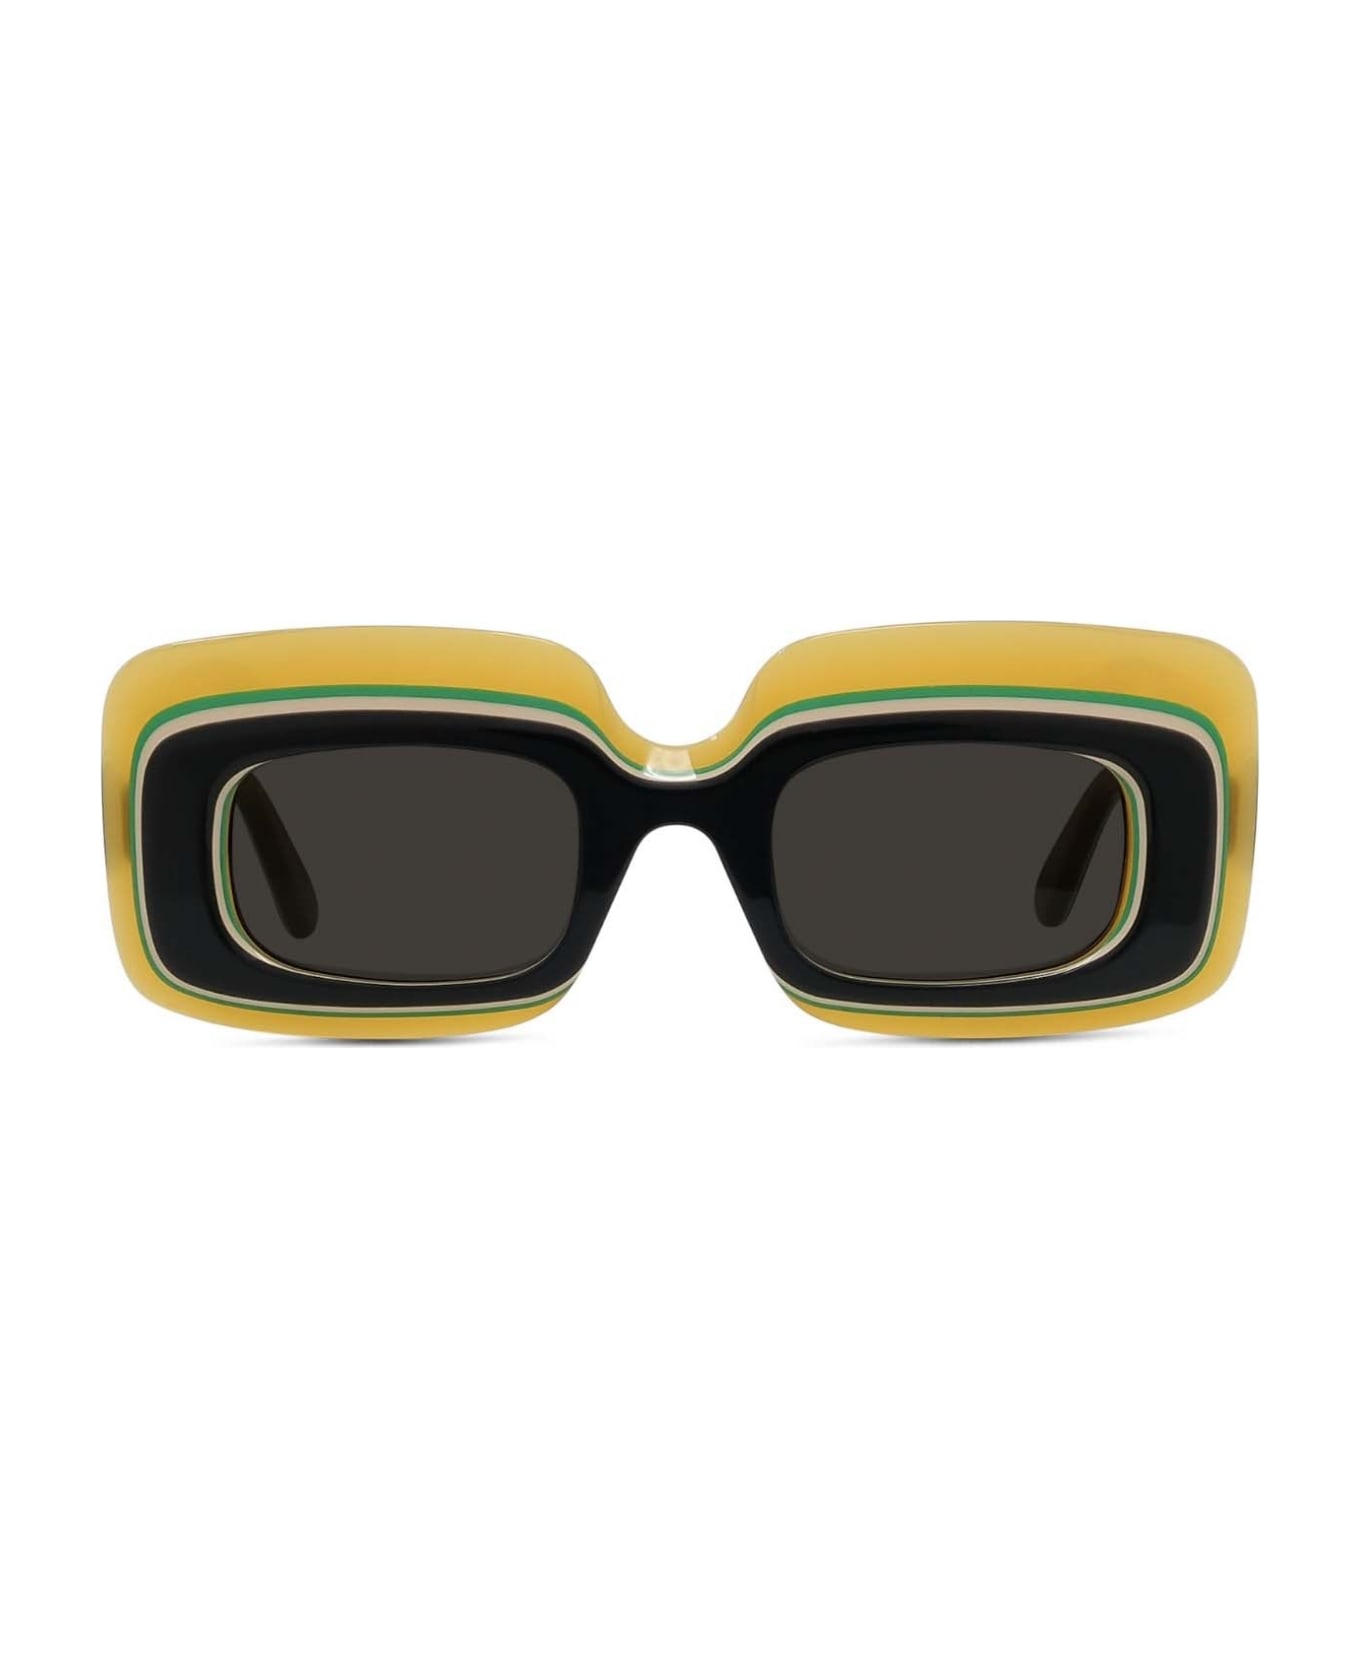 Loewe Sunglasses - Nero/Grigio